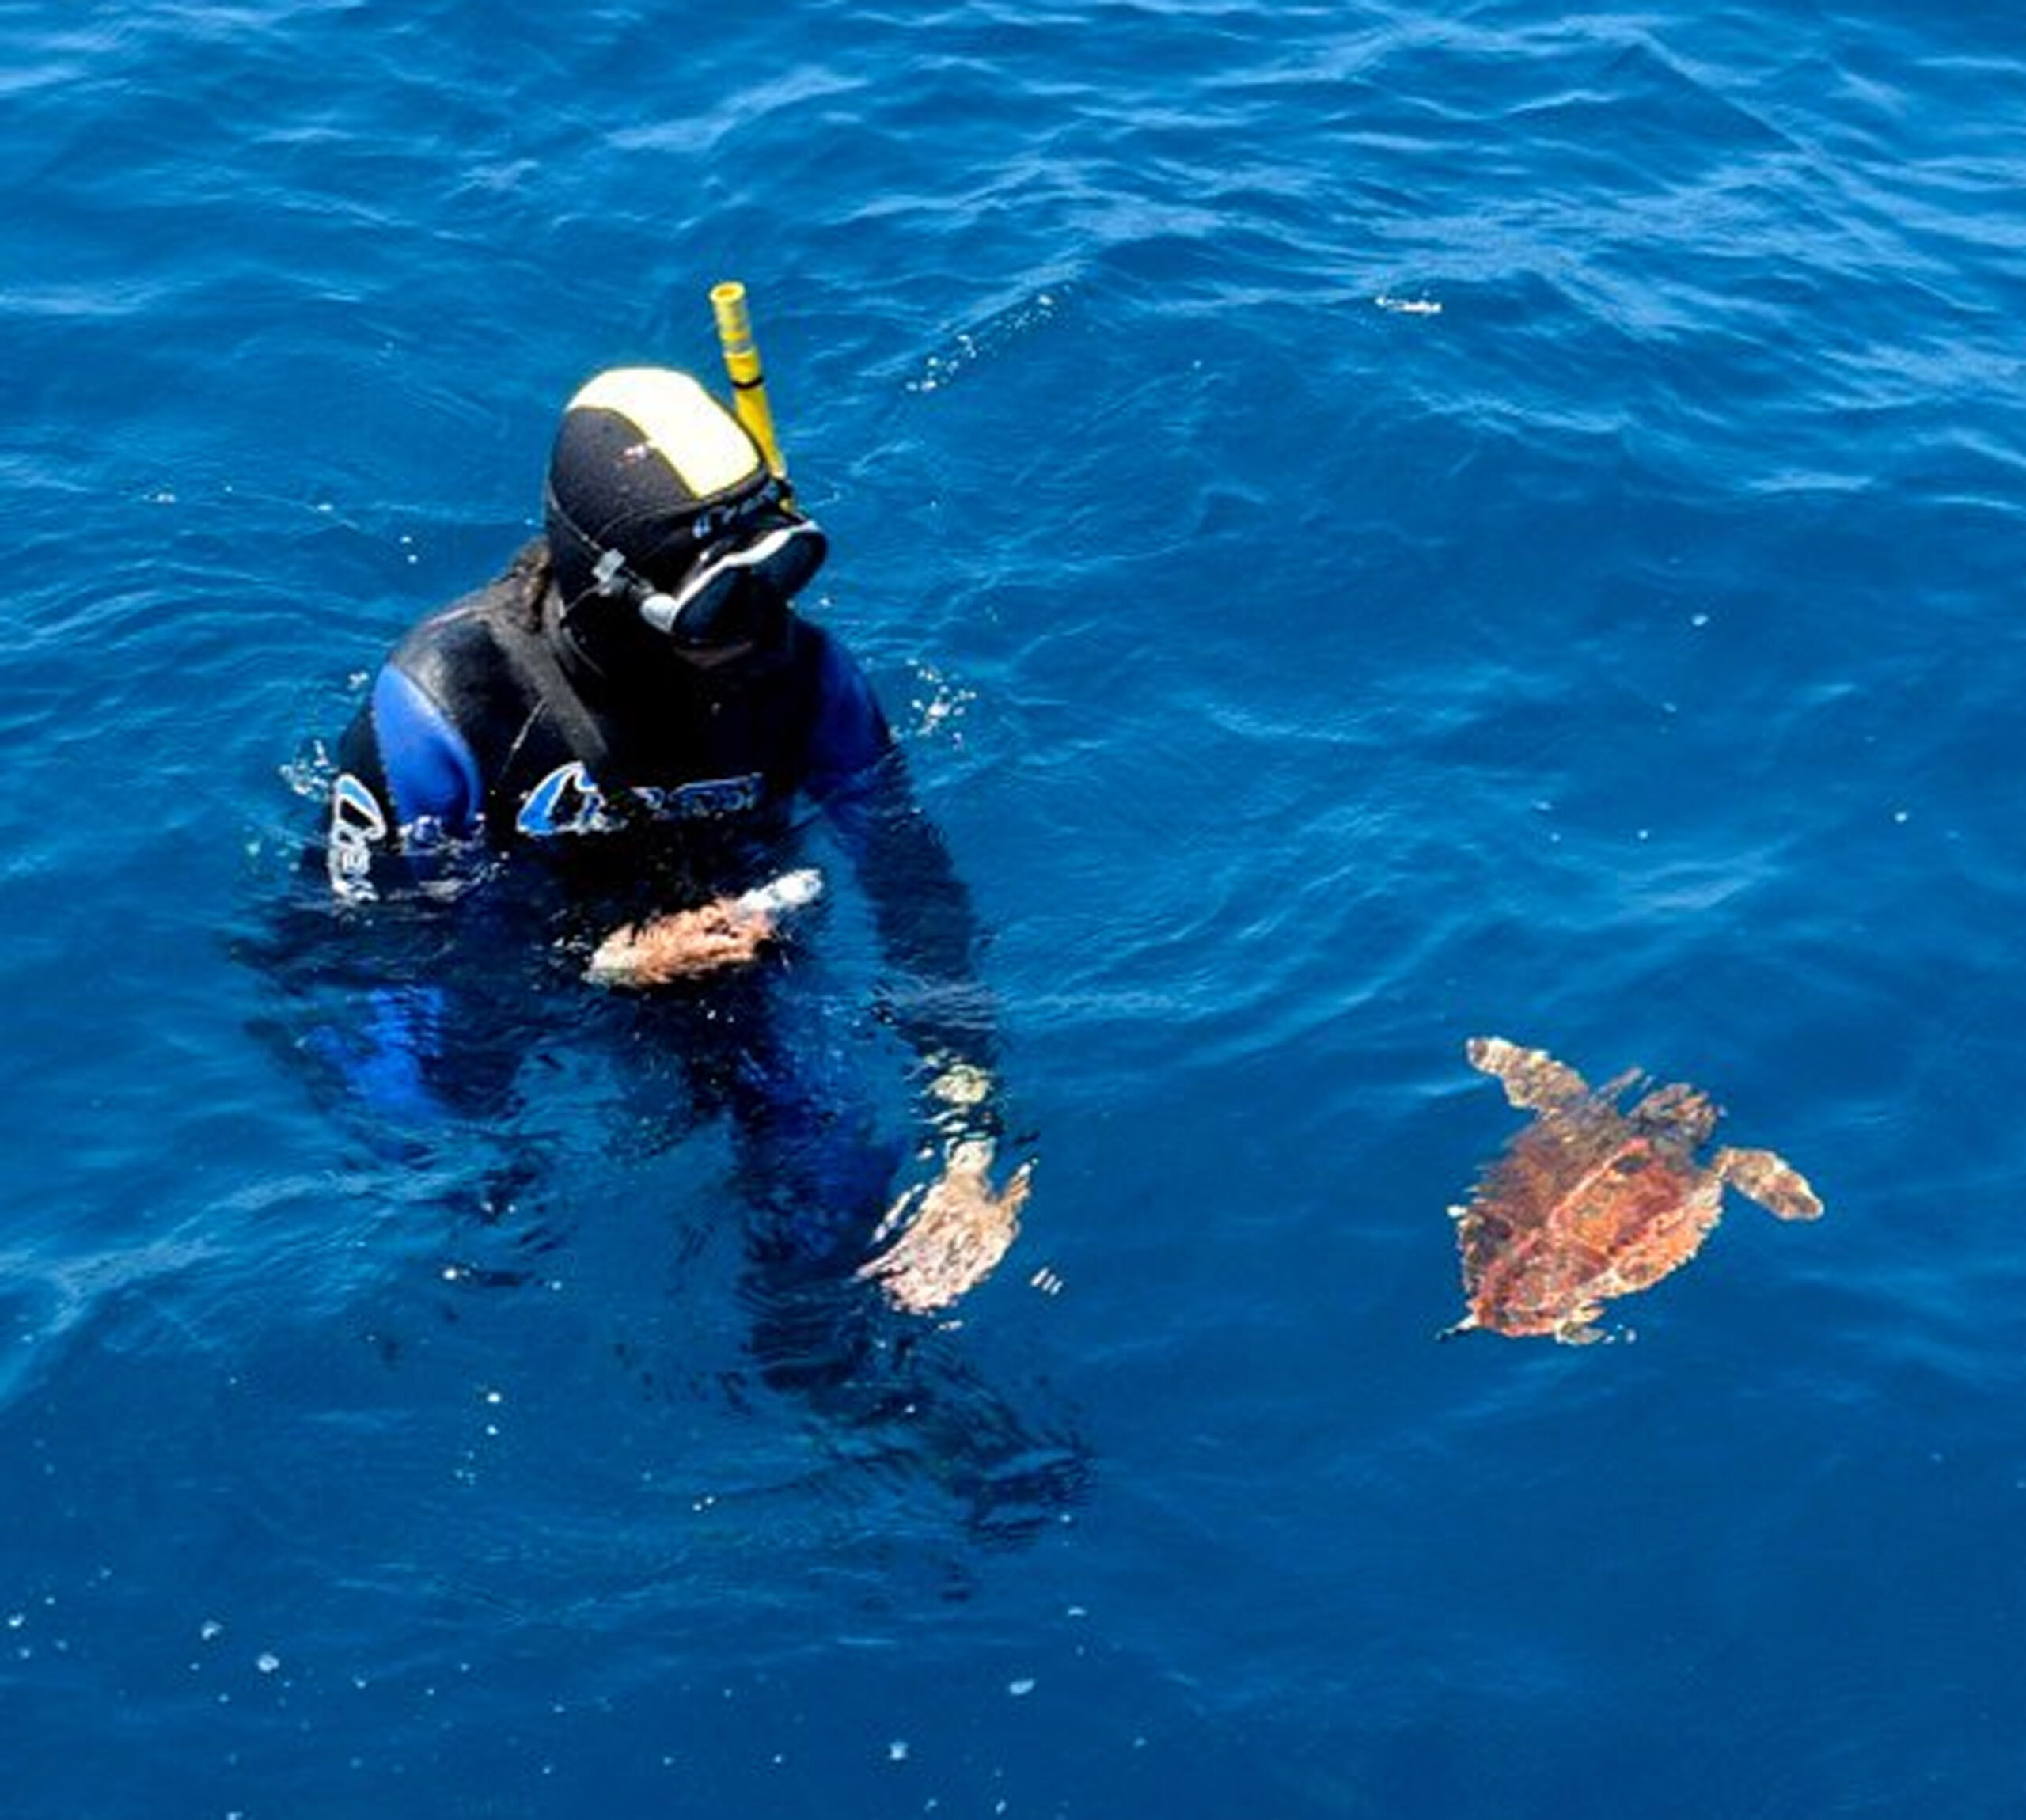 ‘Comanchita', a tartaruga rescatada en abril en Ons, regresa ao mar